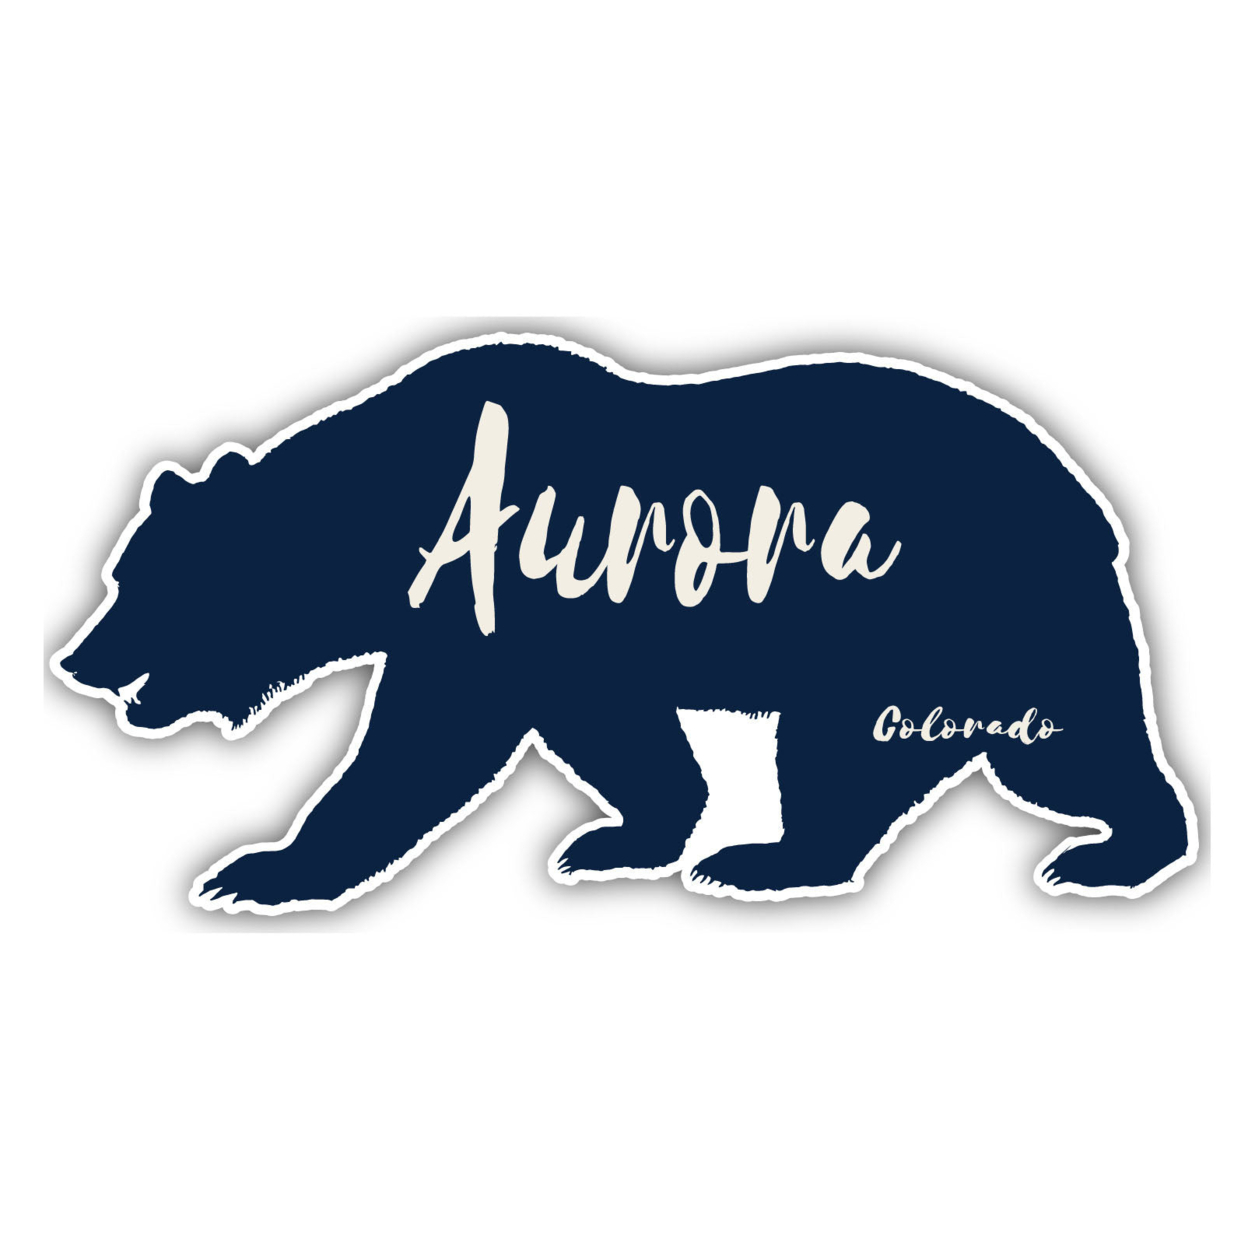 Aurora Colorado Souvenir Decorative Stickers (Choose Theme And Size) - 4-Pack, 8-Inch, Bear